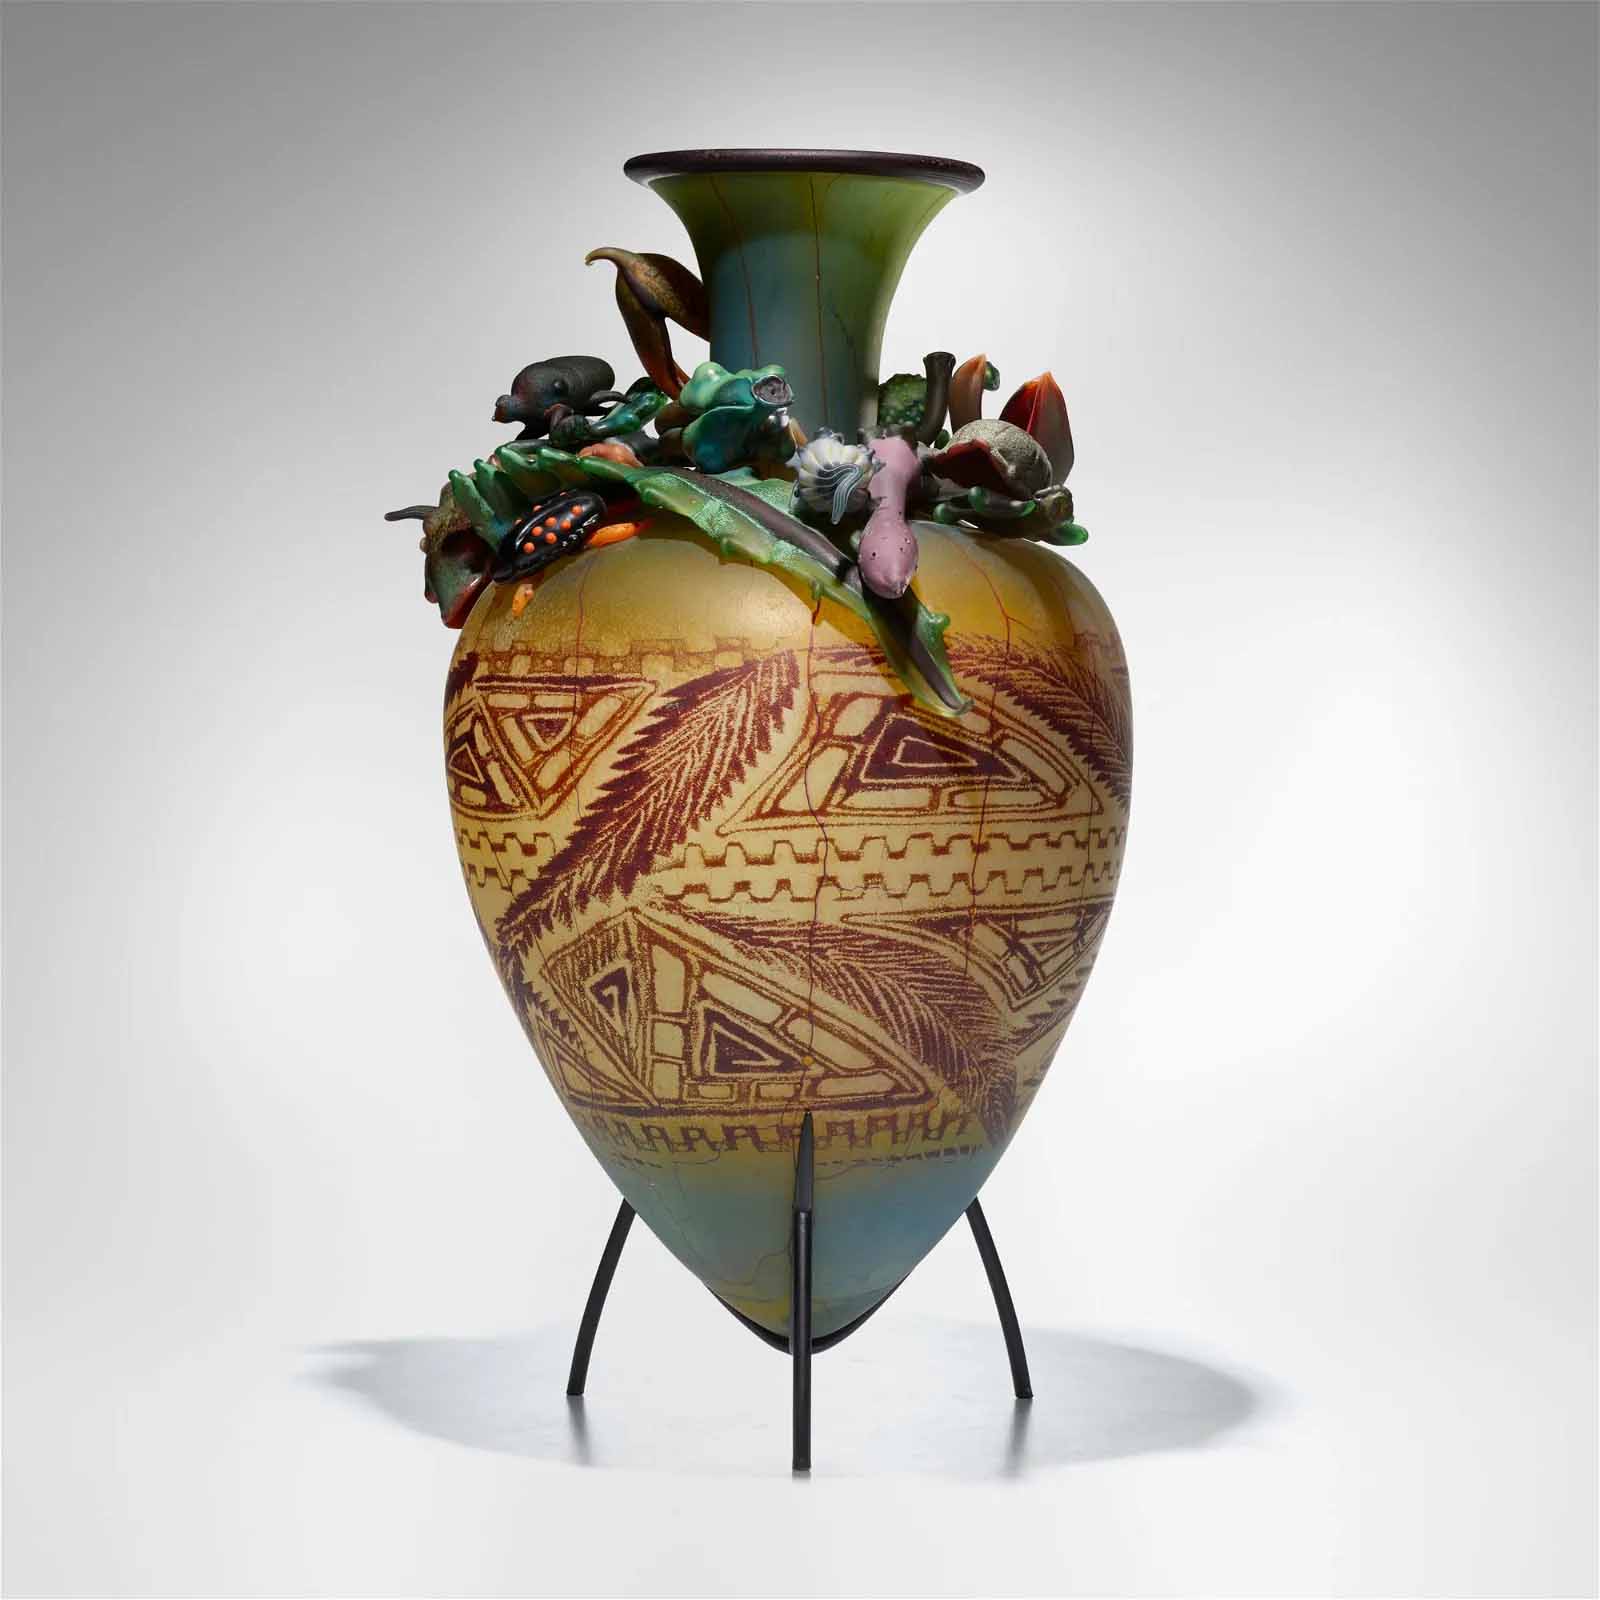 Rago posts $406K world record for a William Morris glass vase